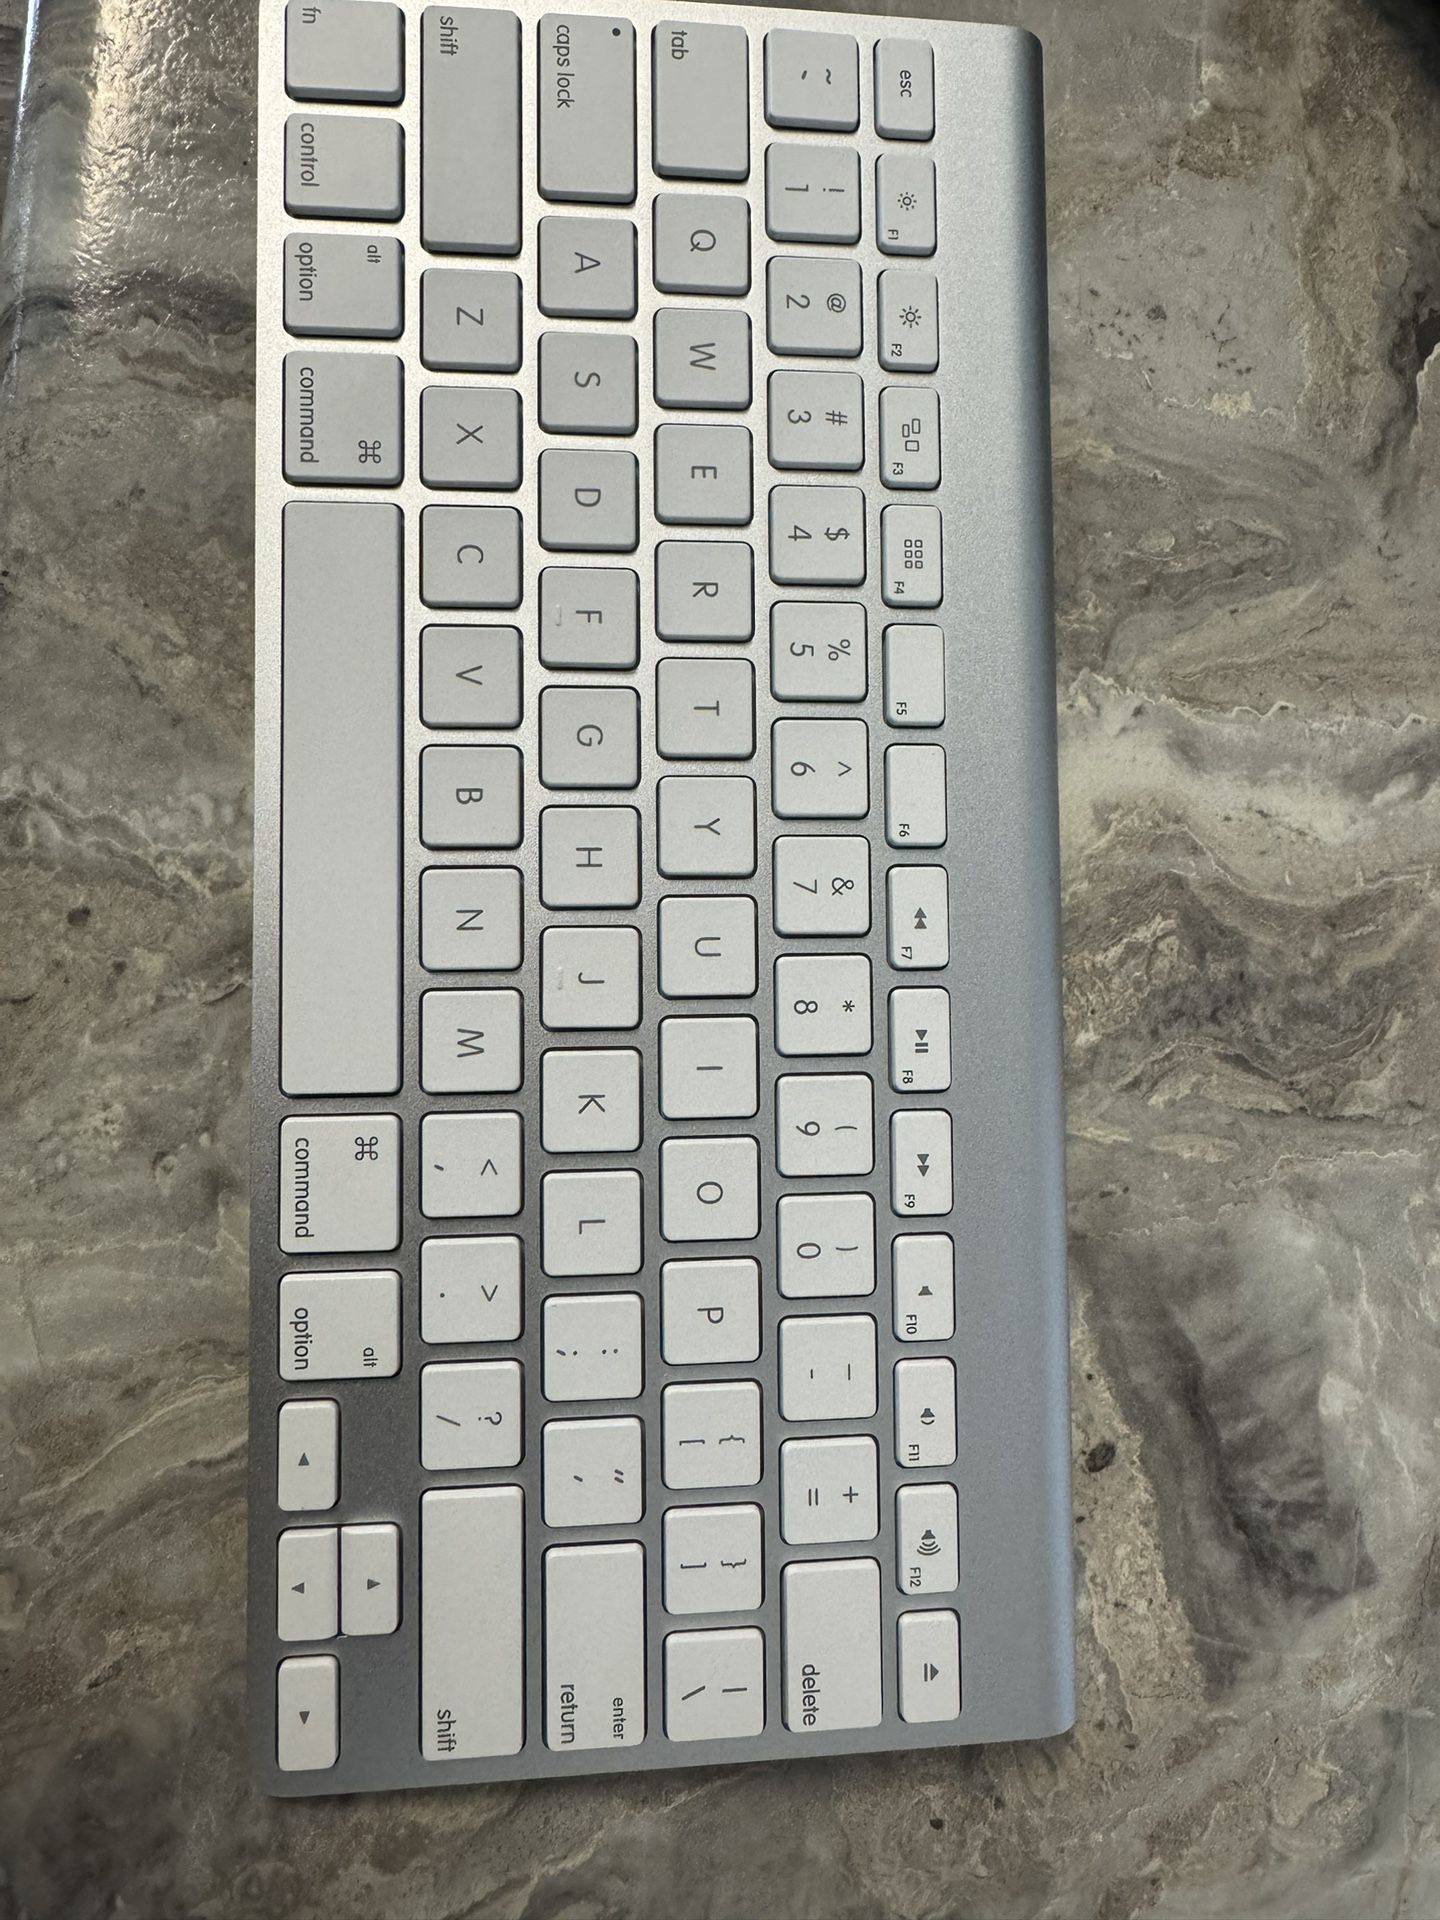 Apple A1314 Wireless Keyboard MC184LL/A, Pre-Owned: Like New 